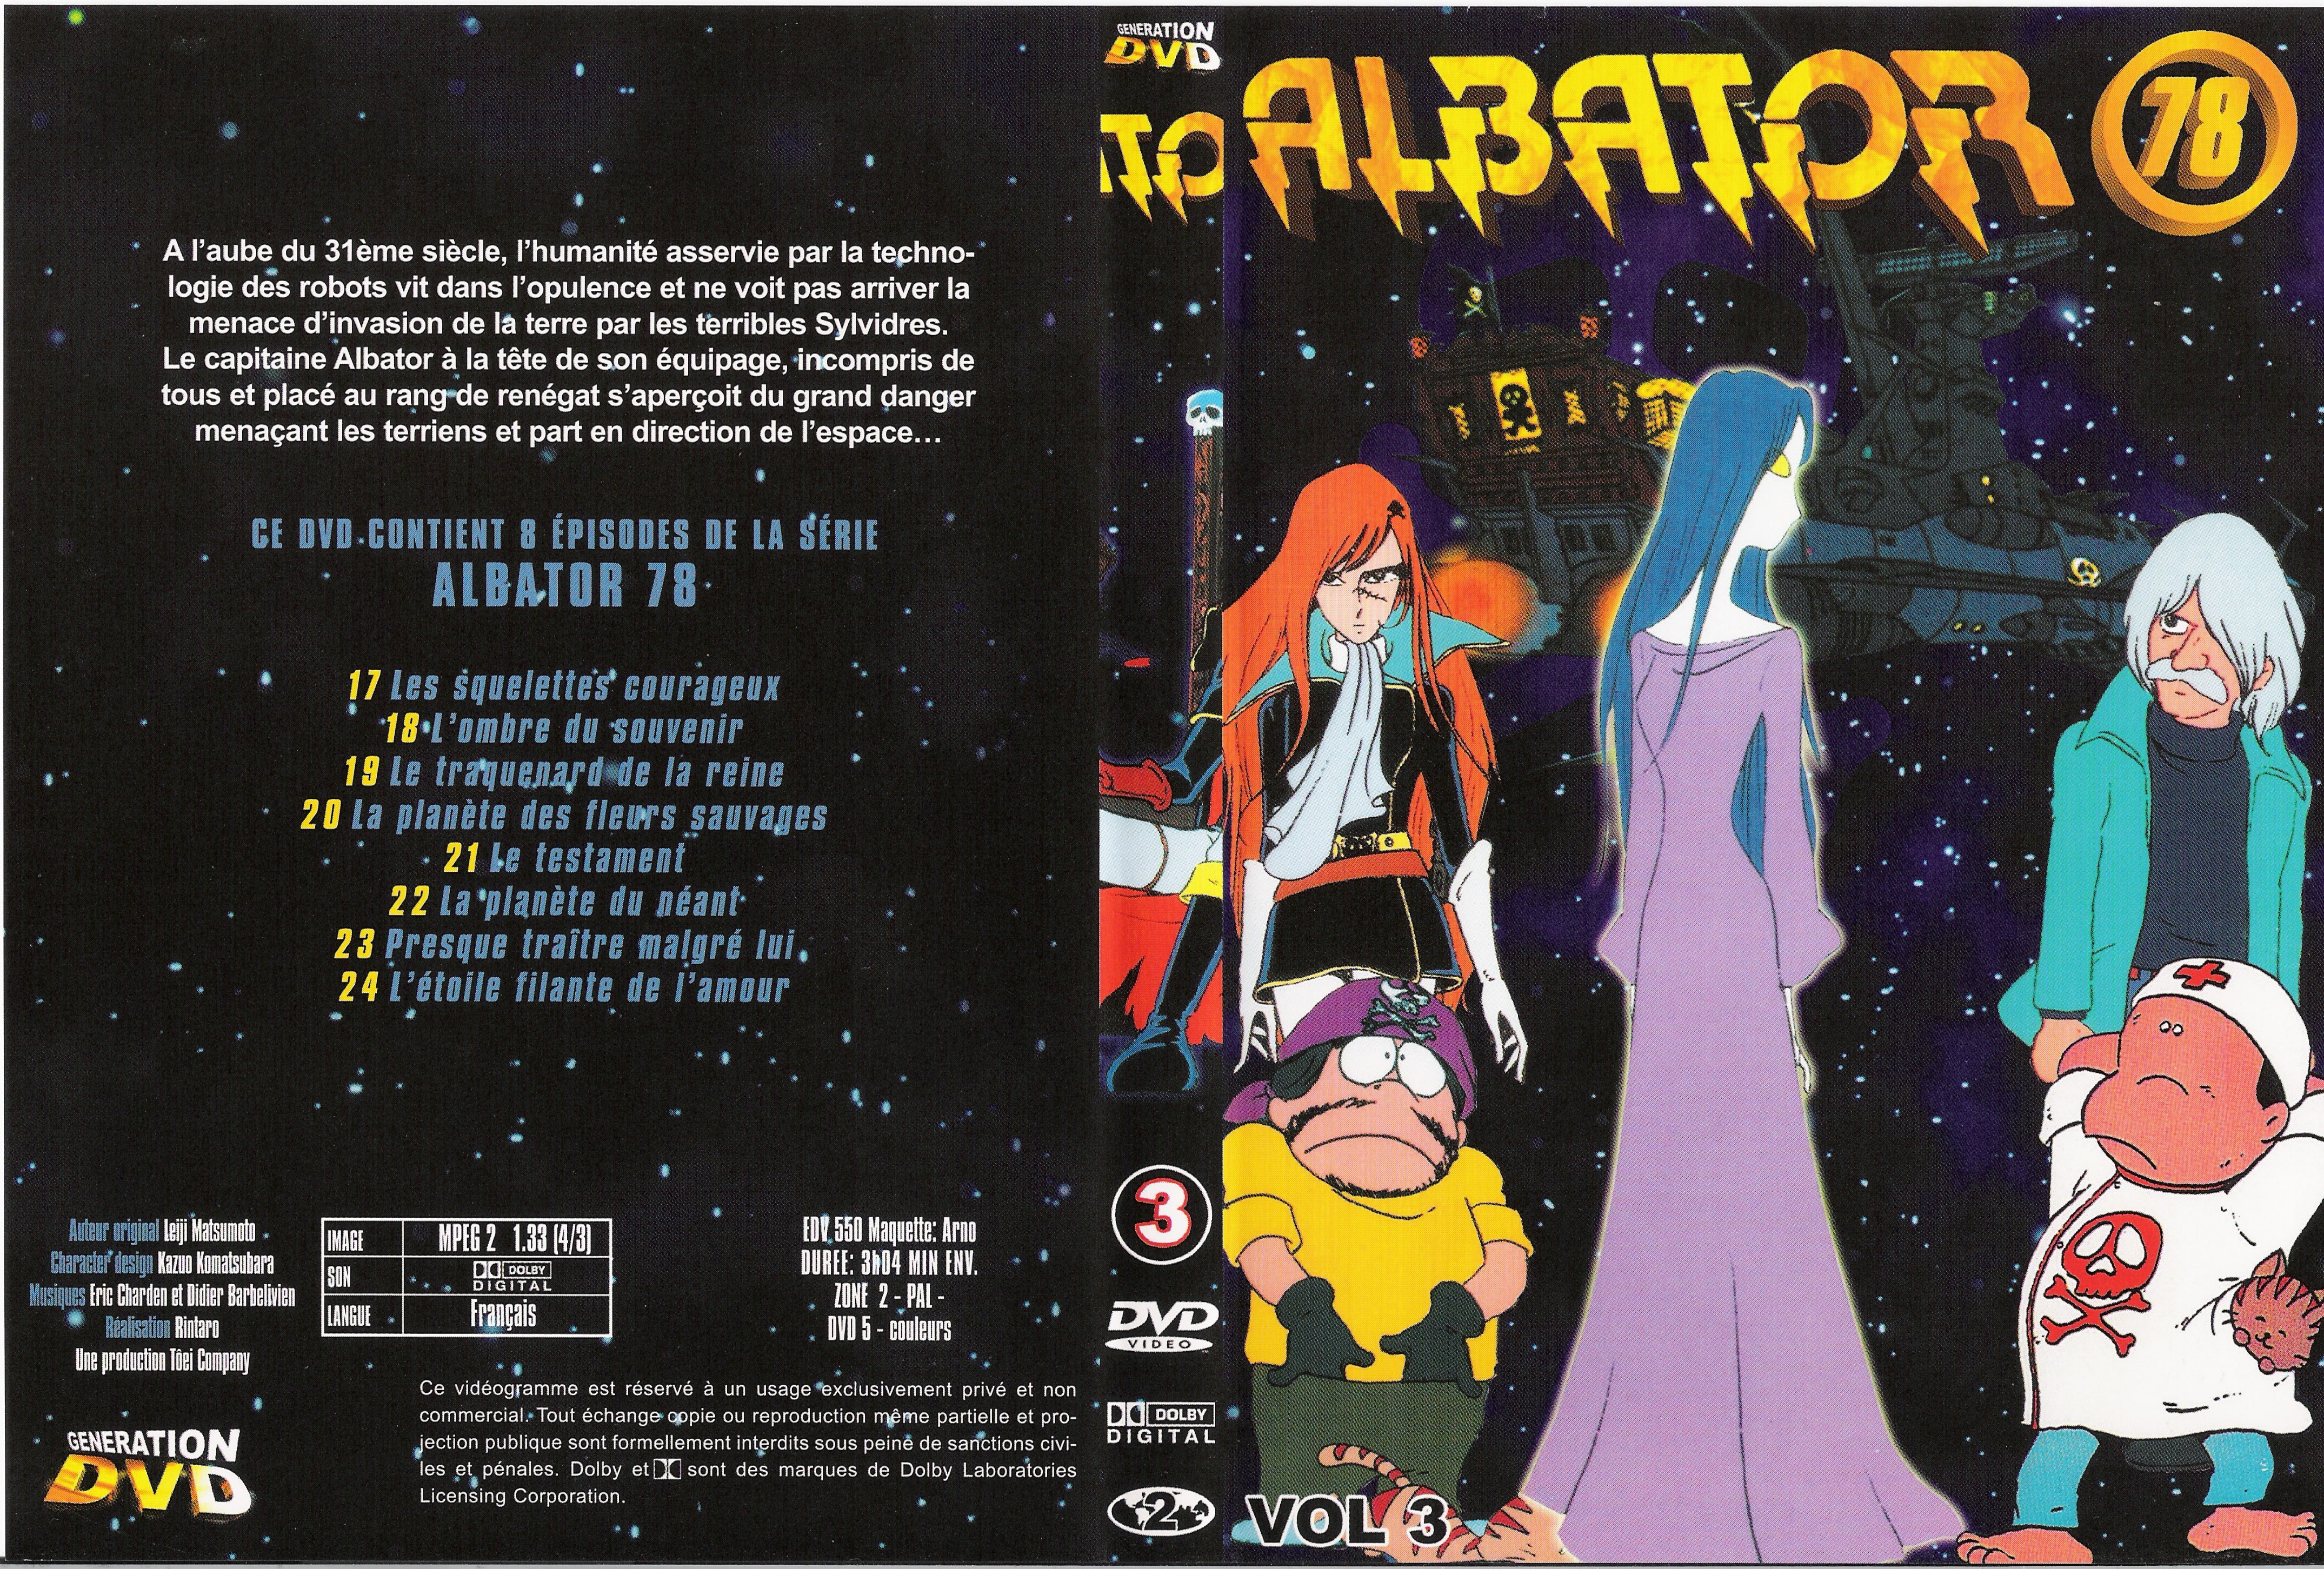 Jaquette DVD Albator 78 vol 3 (GENERATION DVD)